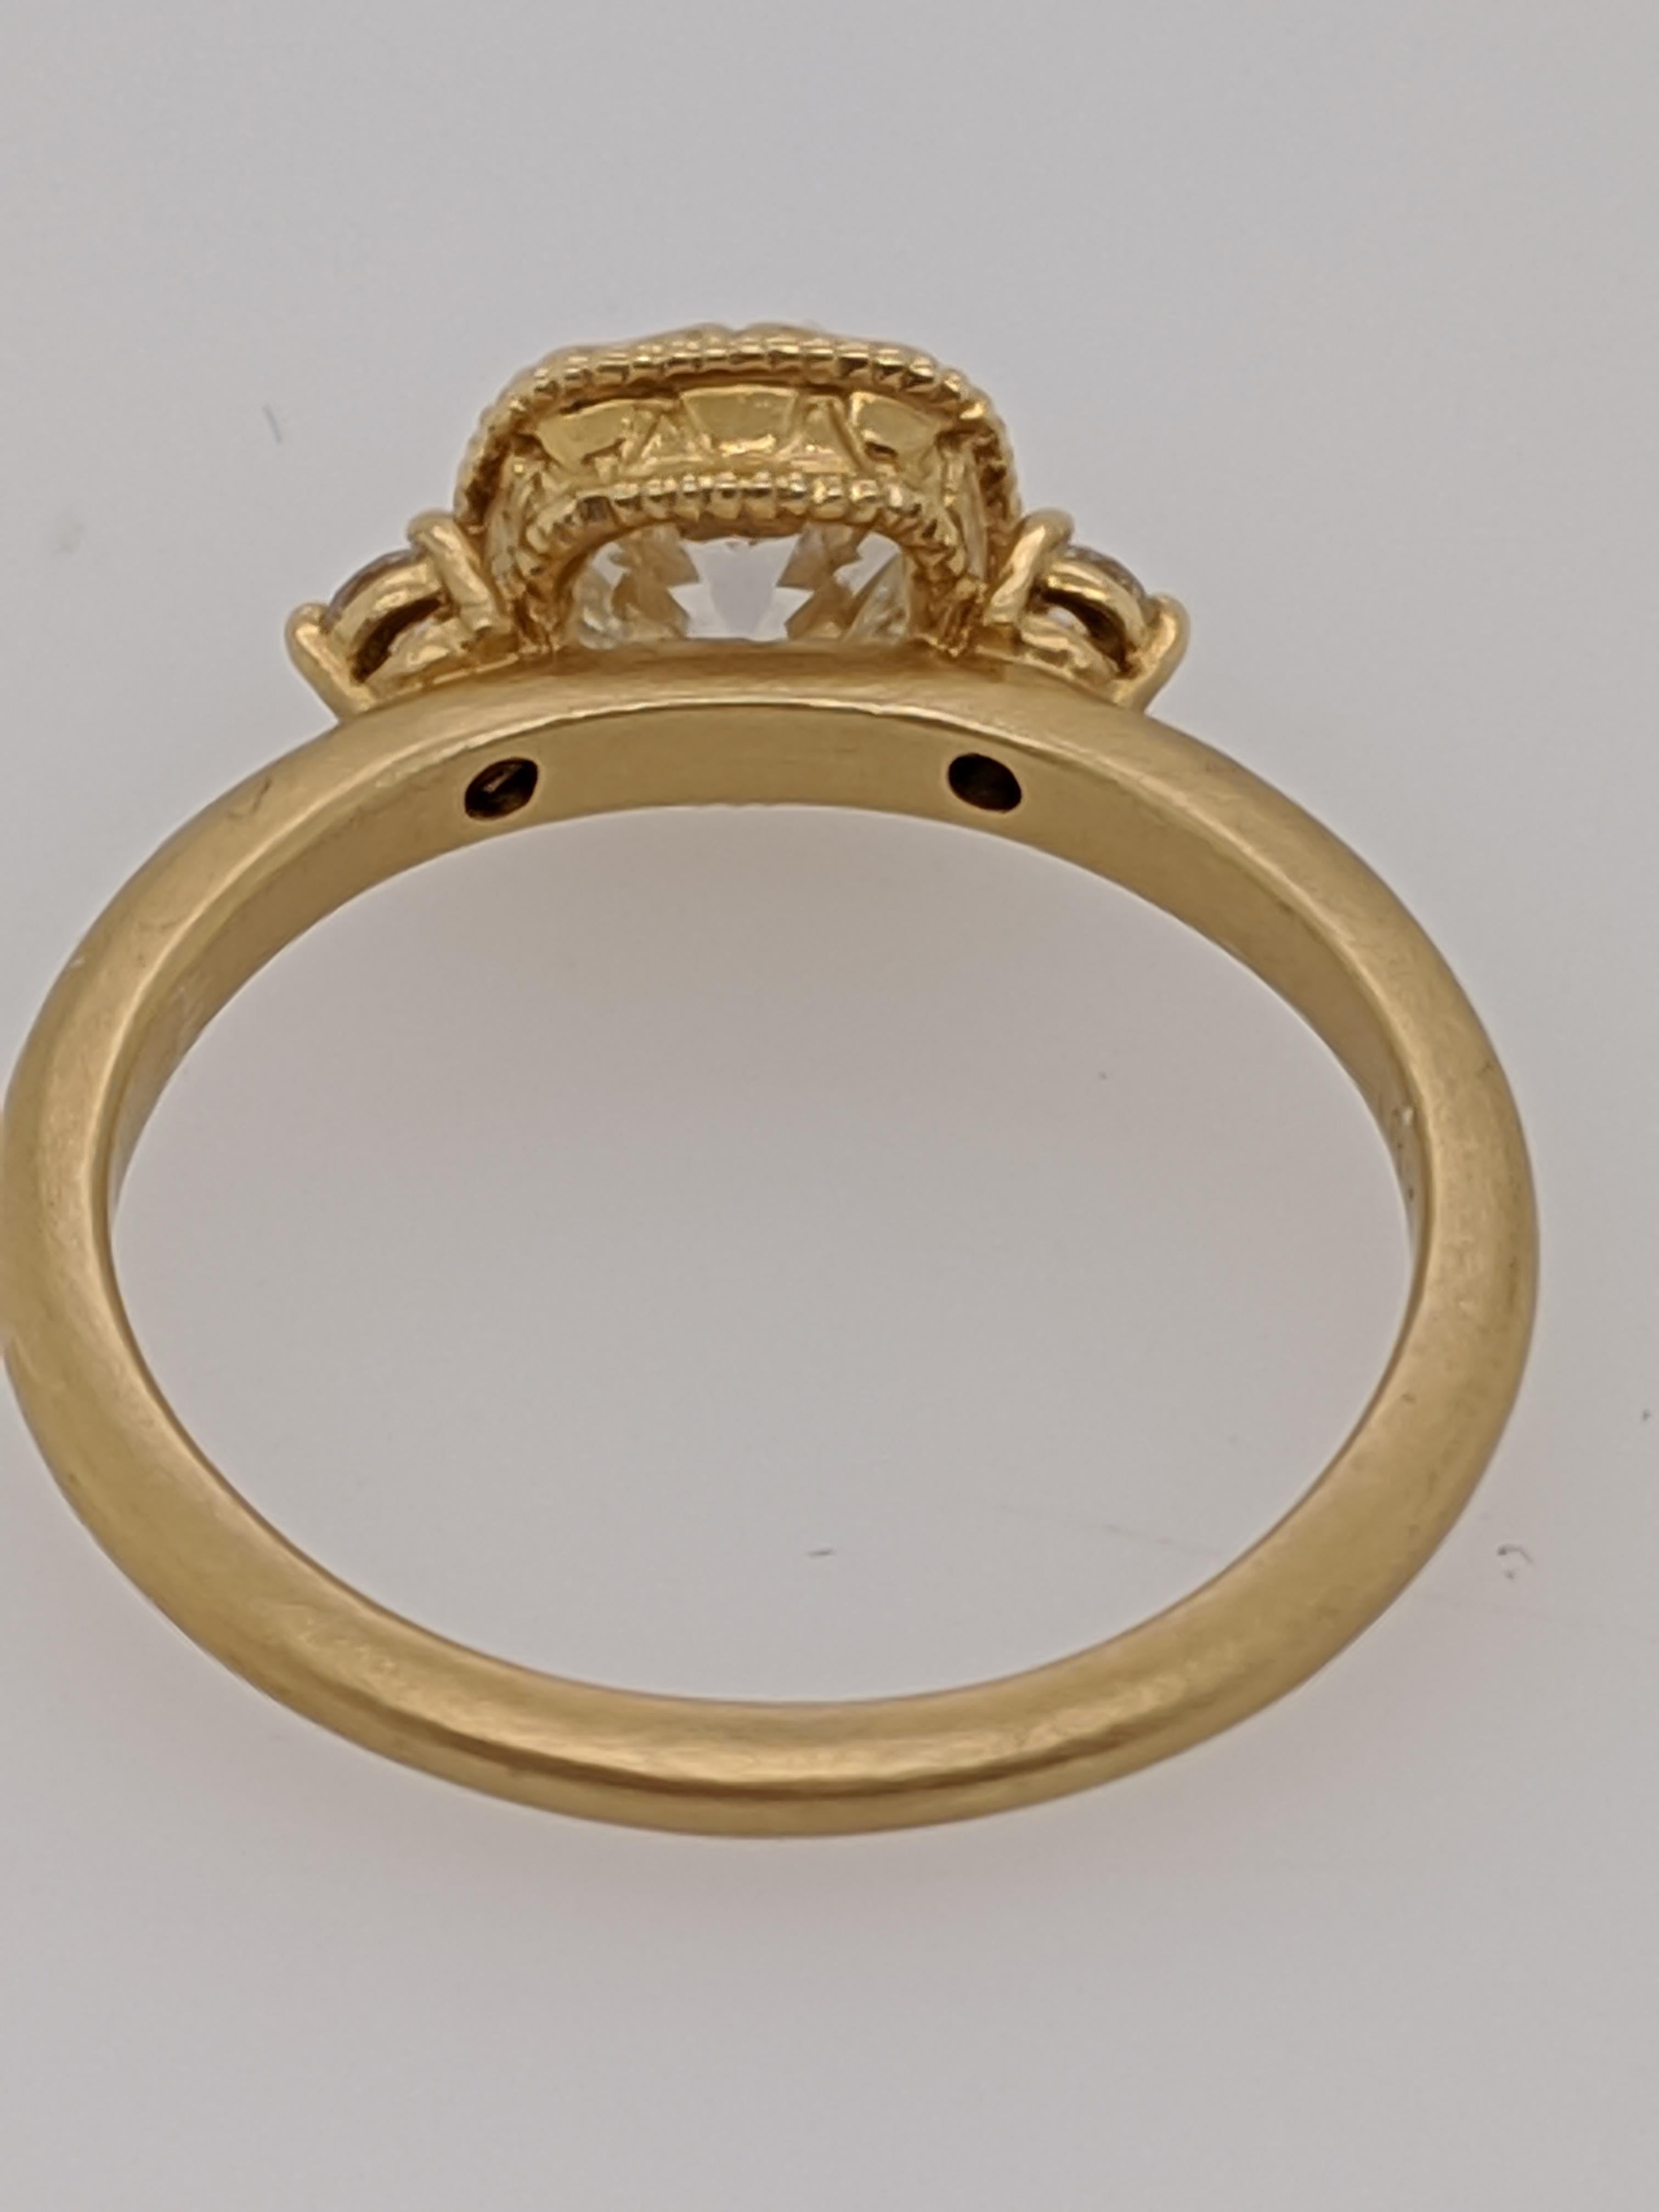 Cushion Cut One Carat Antique Cut Cushion Diamond Ring in 18 Karat Yellow Gold, GIA